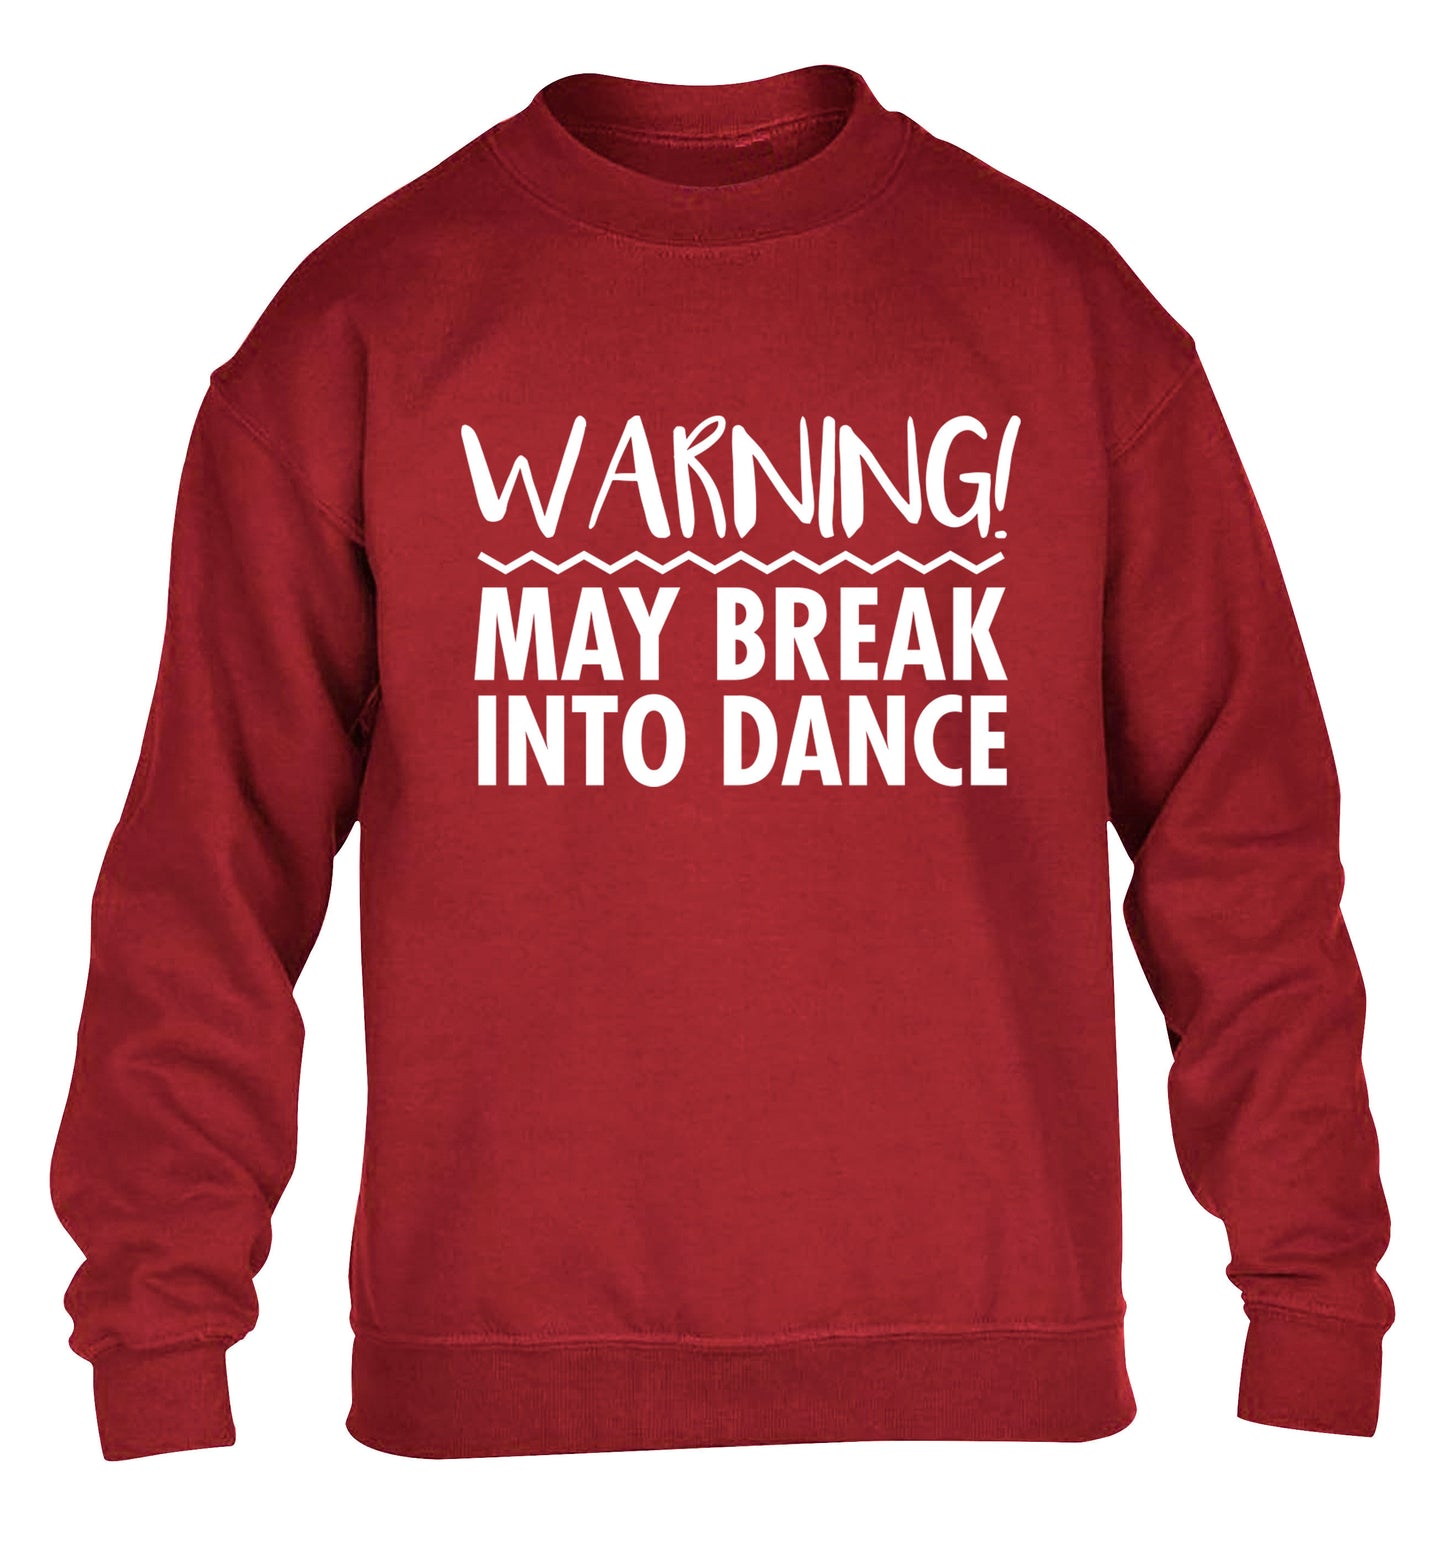 Warning may break into dance children's grey sweater 12-14 Years